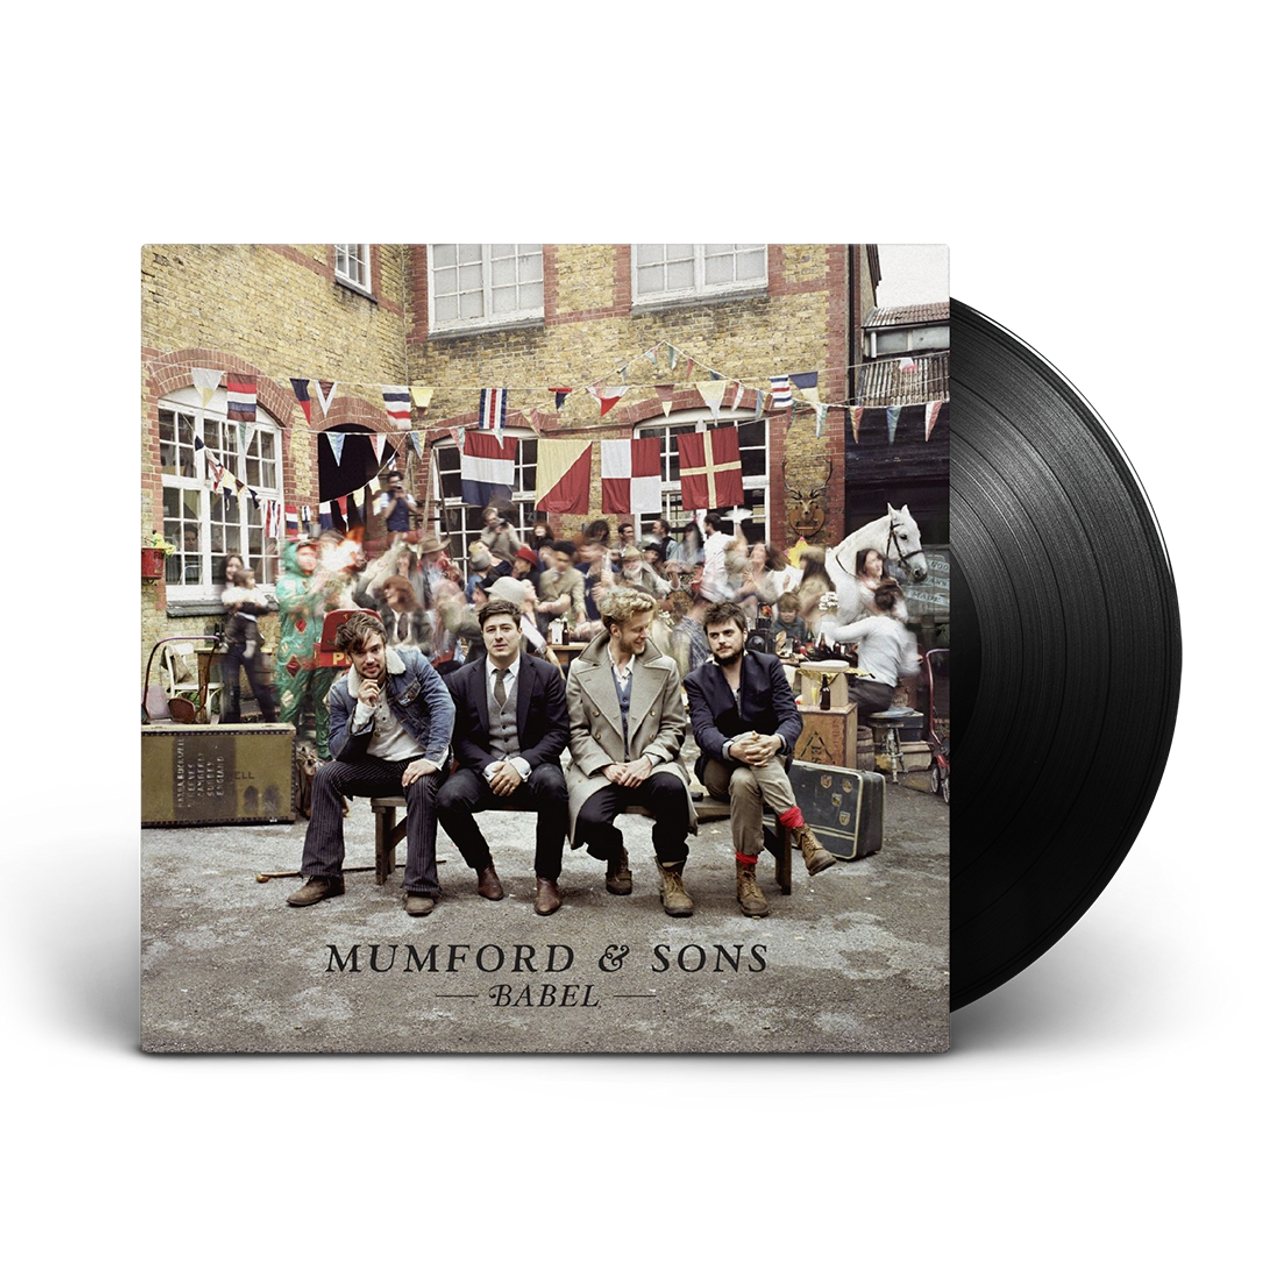 Mumford & Sons, Babel album cover with black vinyl